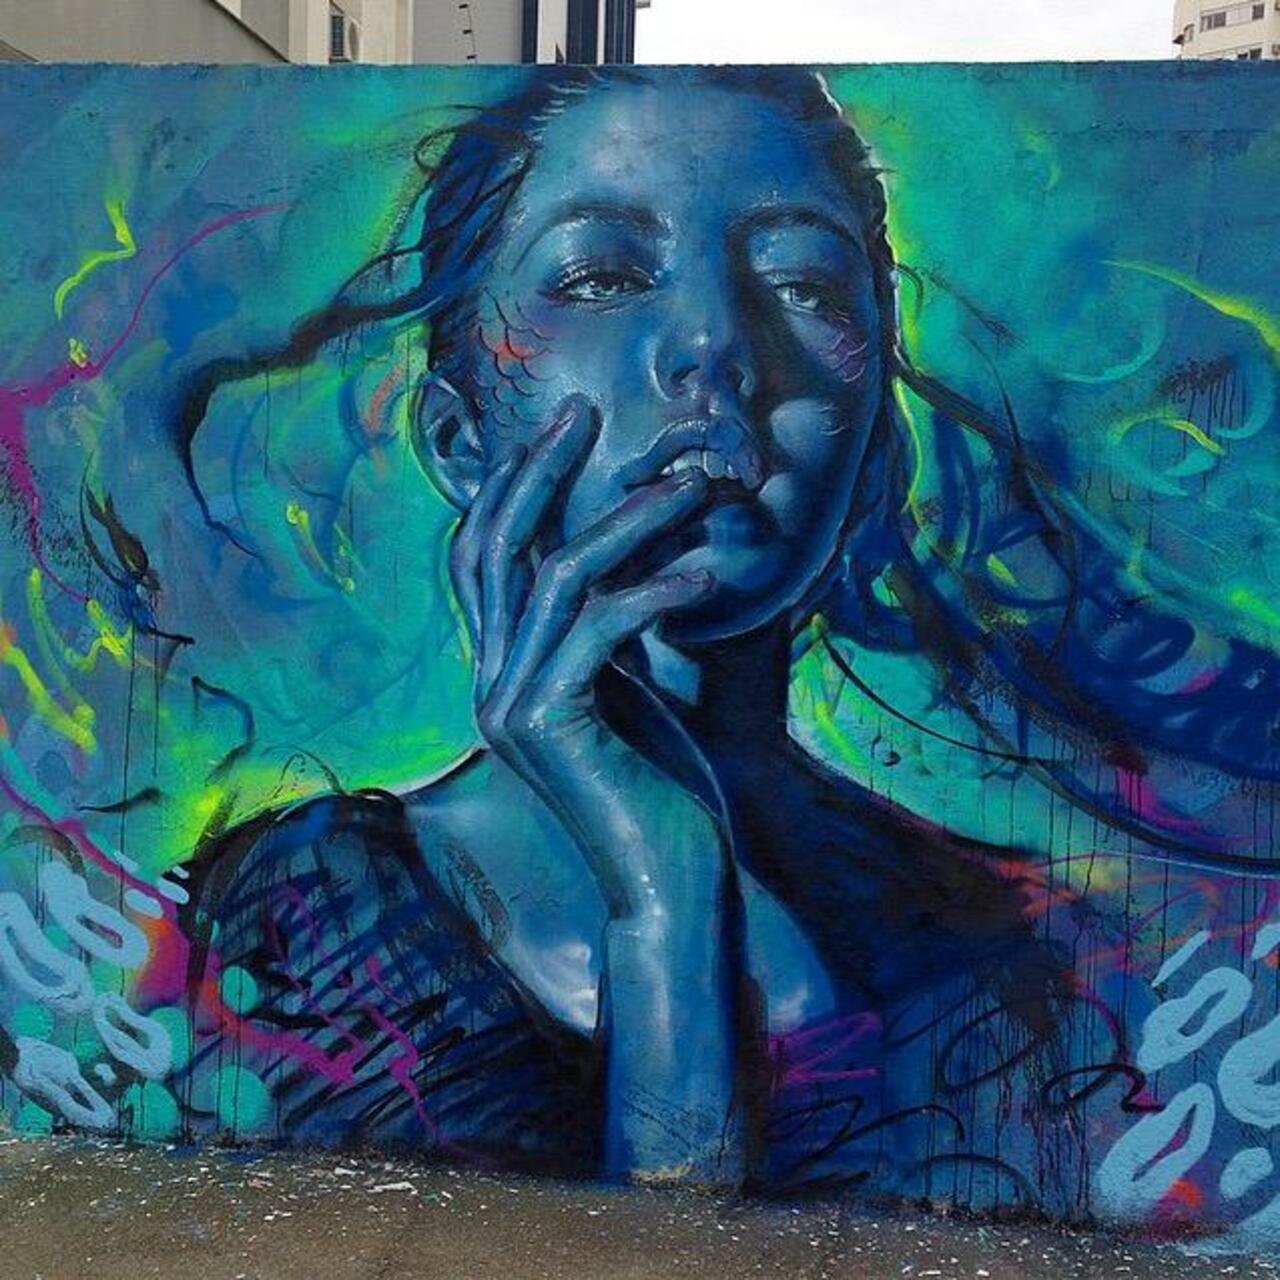 Thiago Valdi new Street Art piece titled 'Day Dreamer'

#art #mural #graffiti #streetart http://t.co/BmAf0kWm00